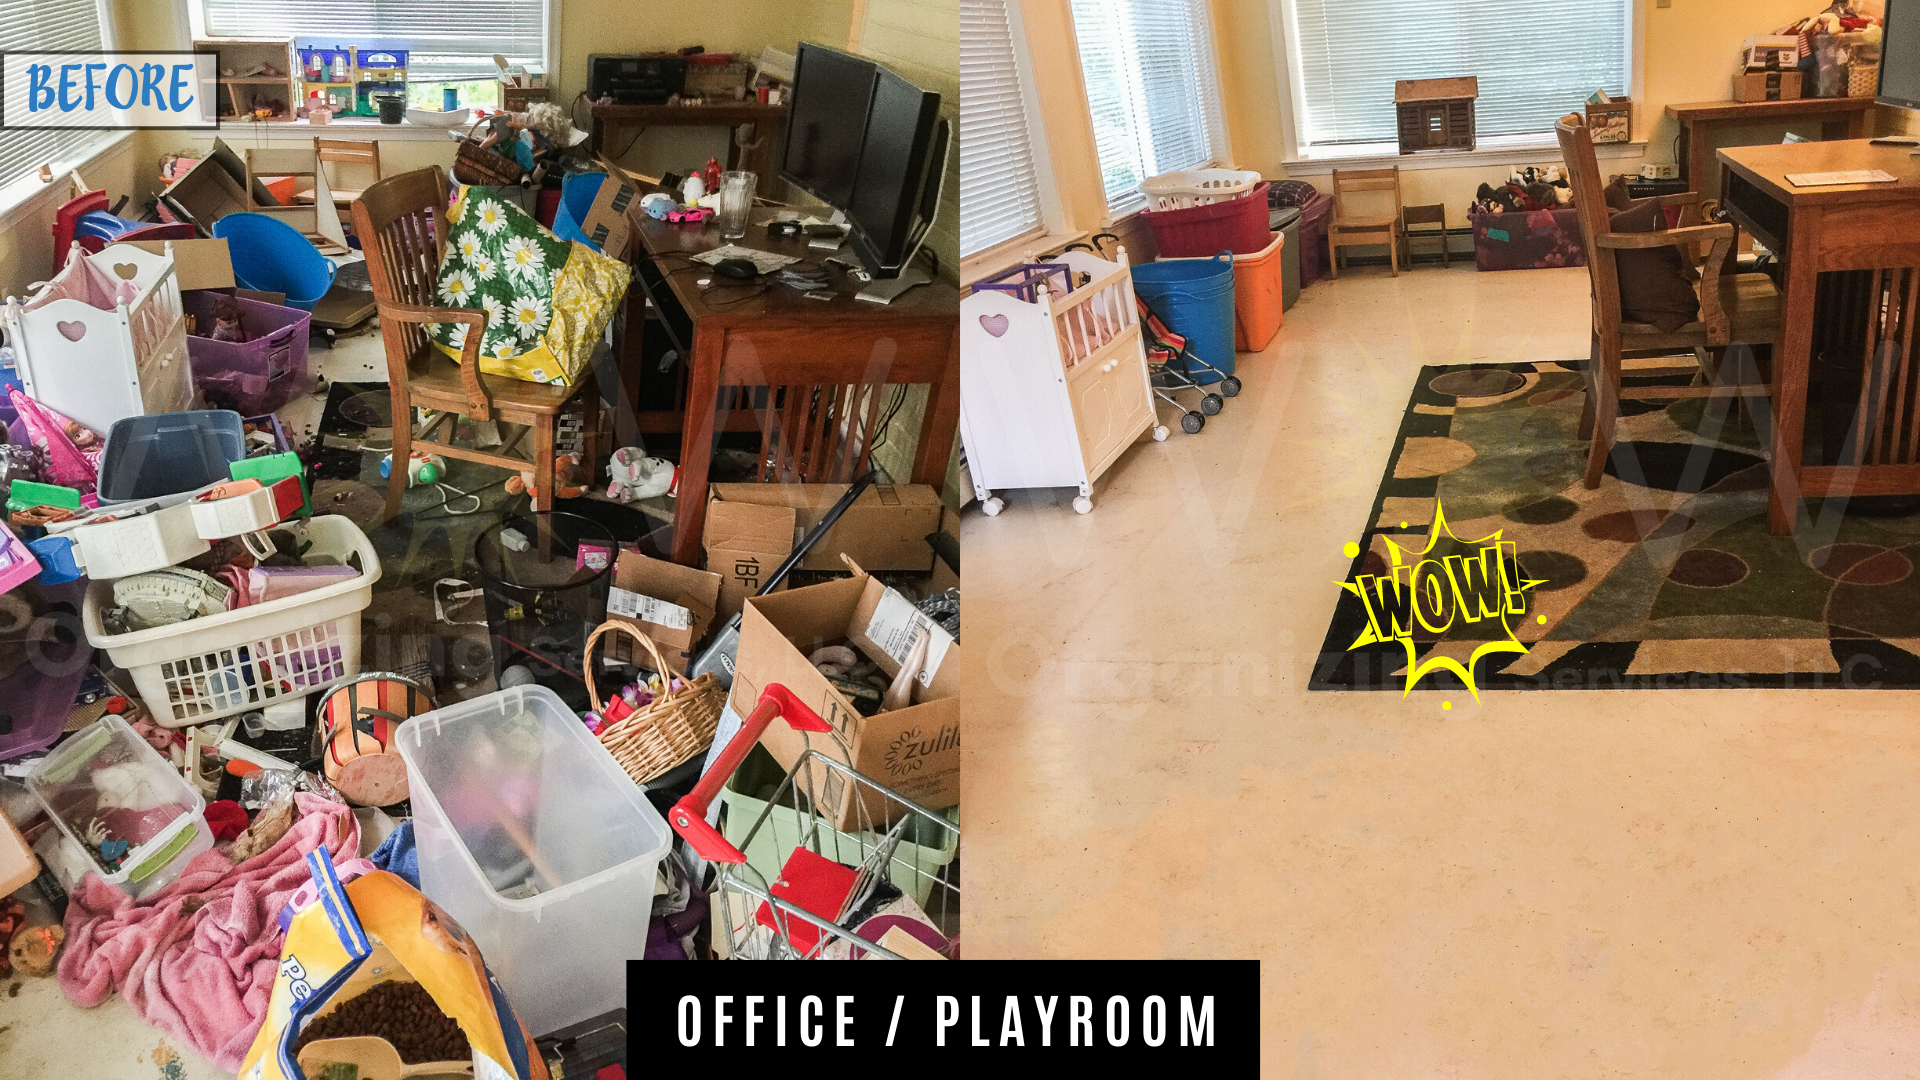 Office Playroom Organized